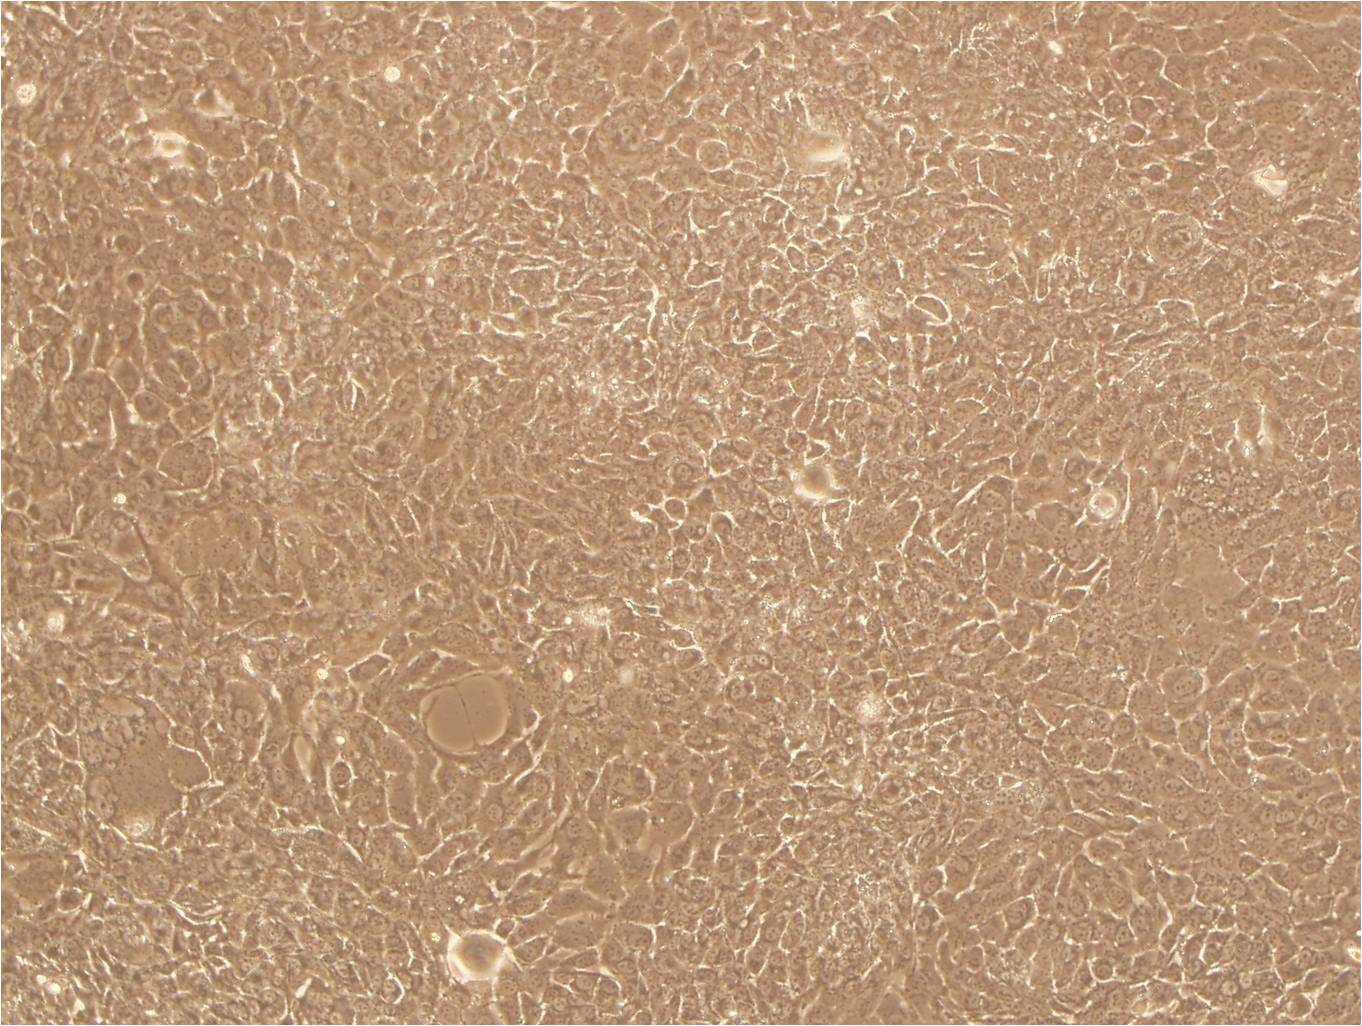 KB Cells|口腔表皮样癌可传代细胞系,KB Cells